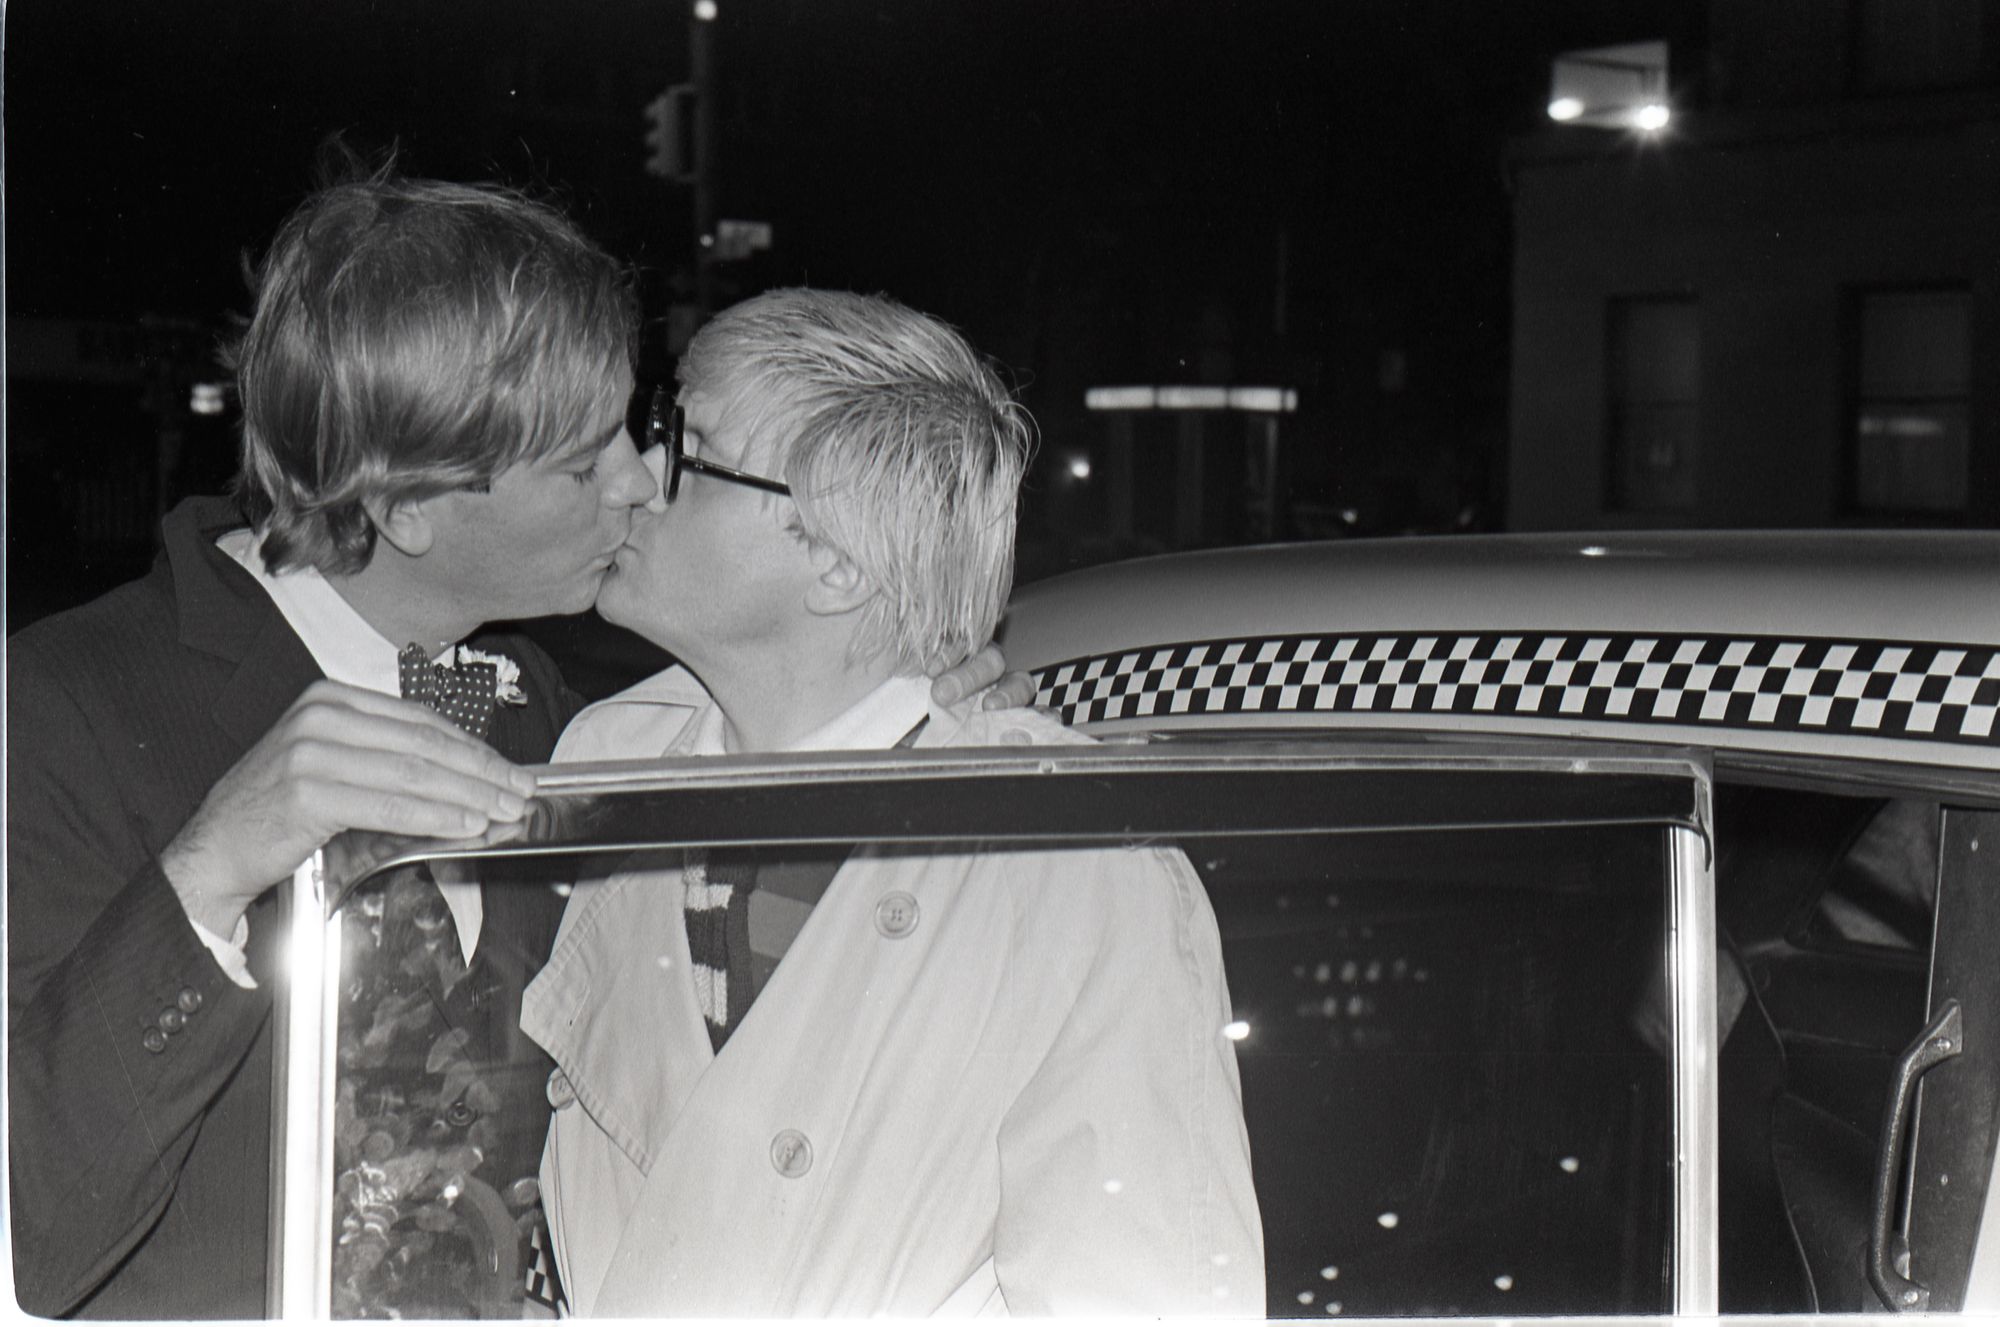 David Hockney shares kiss with man behind open taxi door.